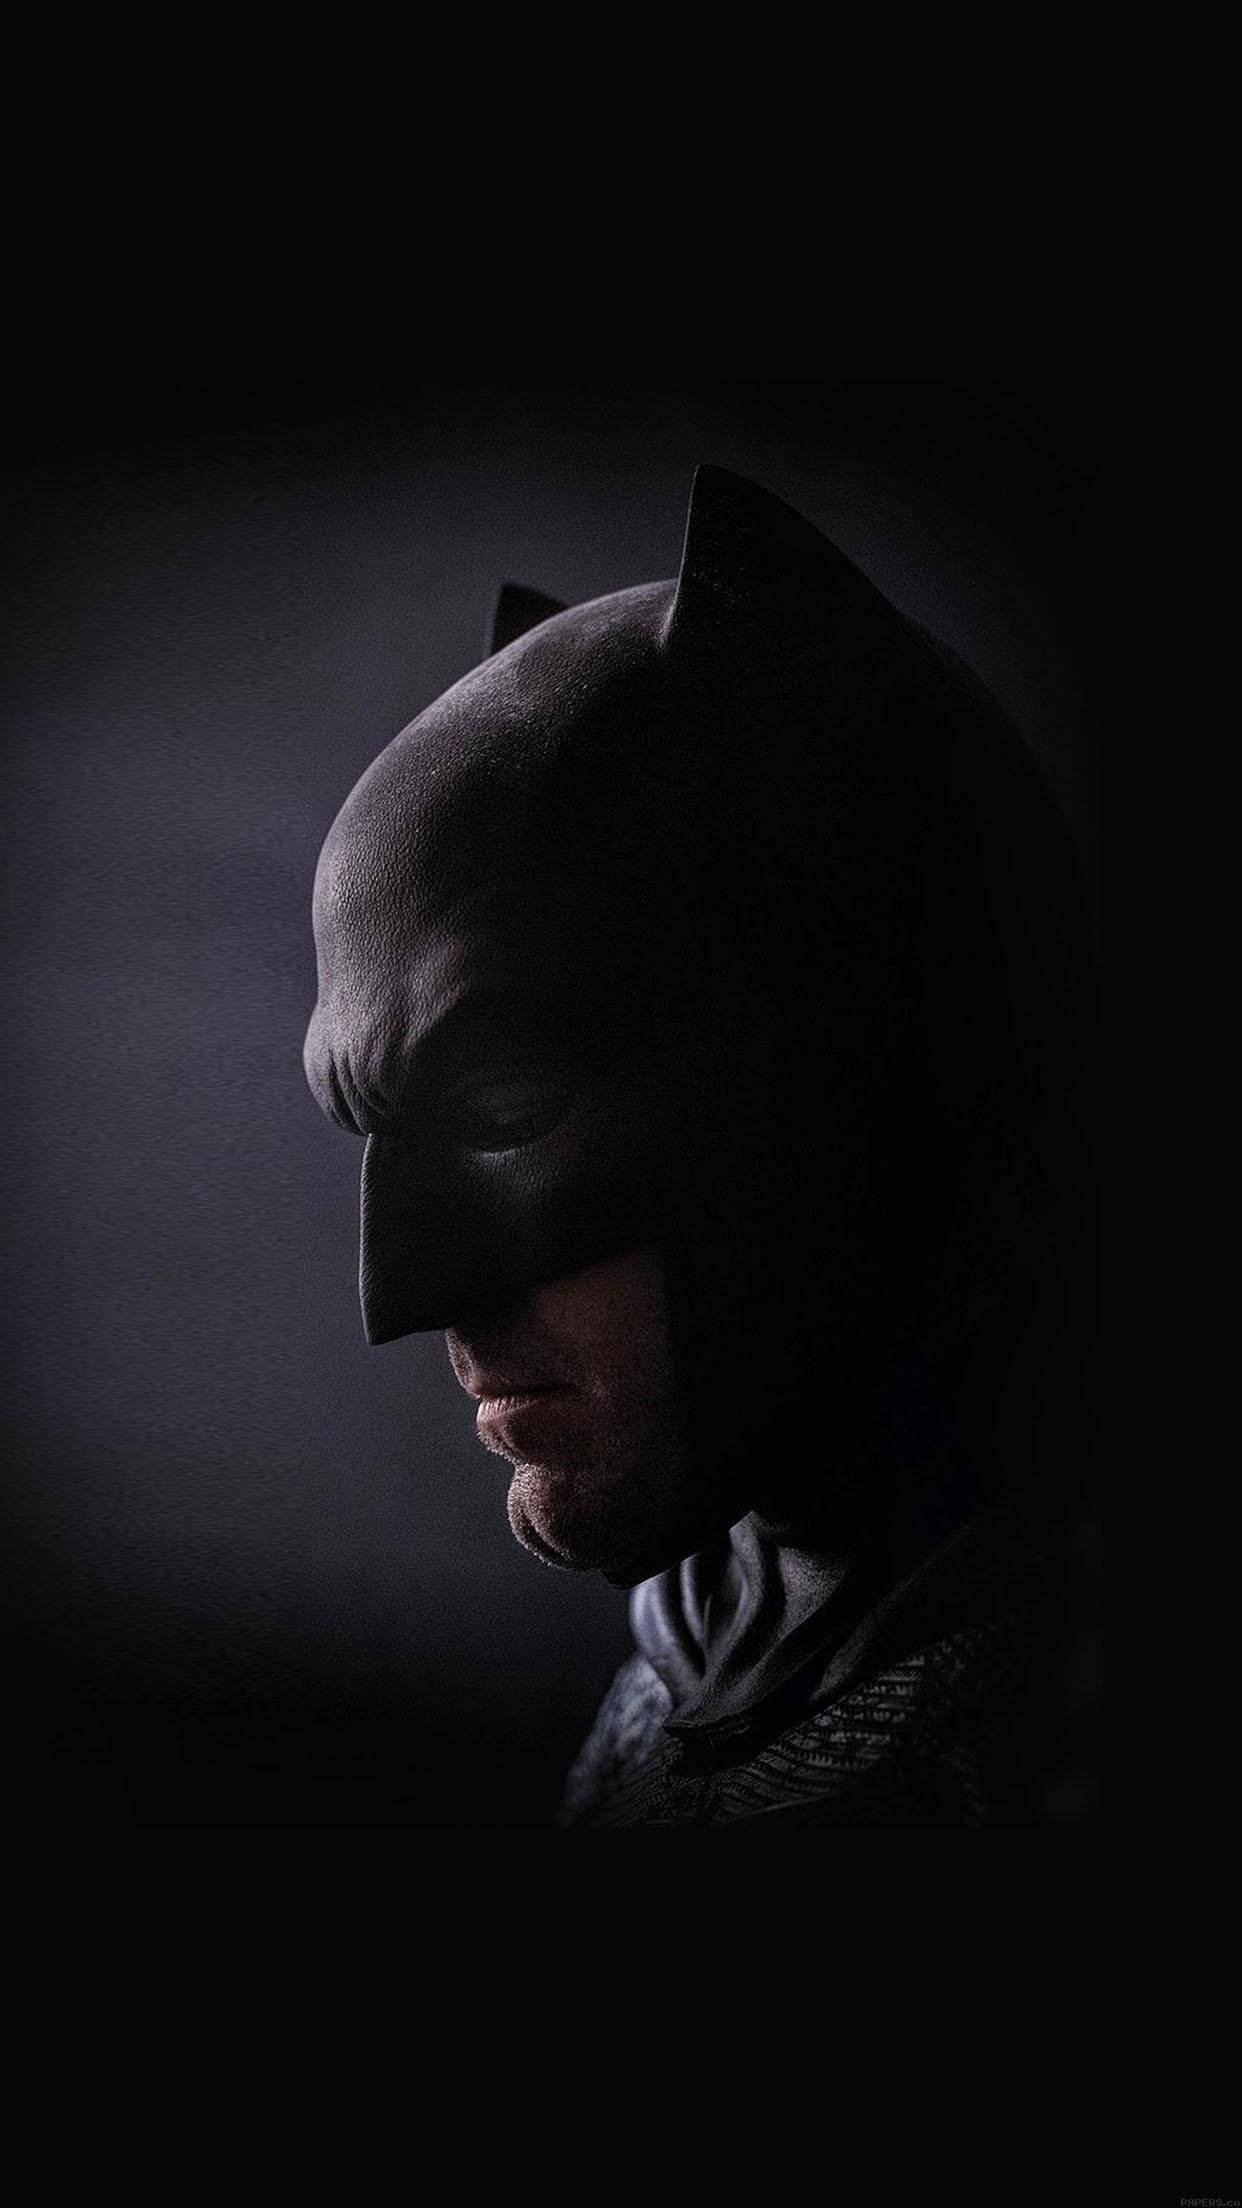 Batman Sideview Close-Up iPhone X Wallpaper